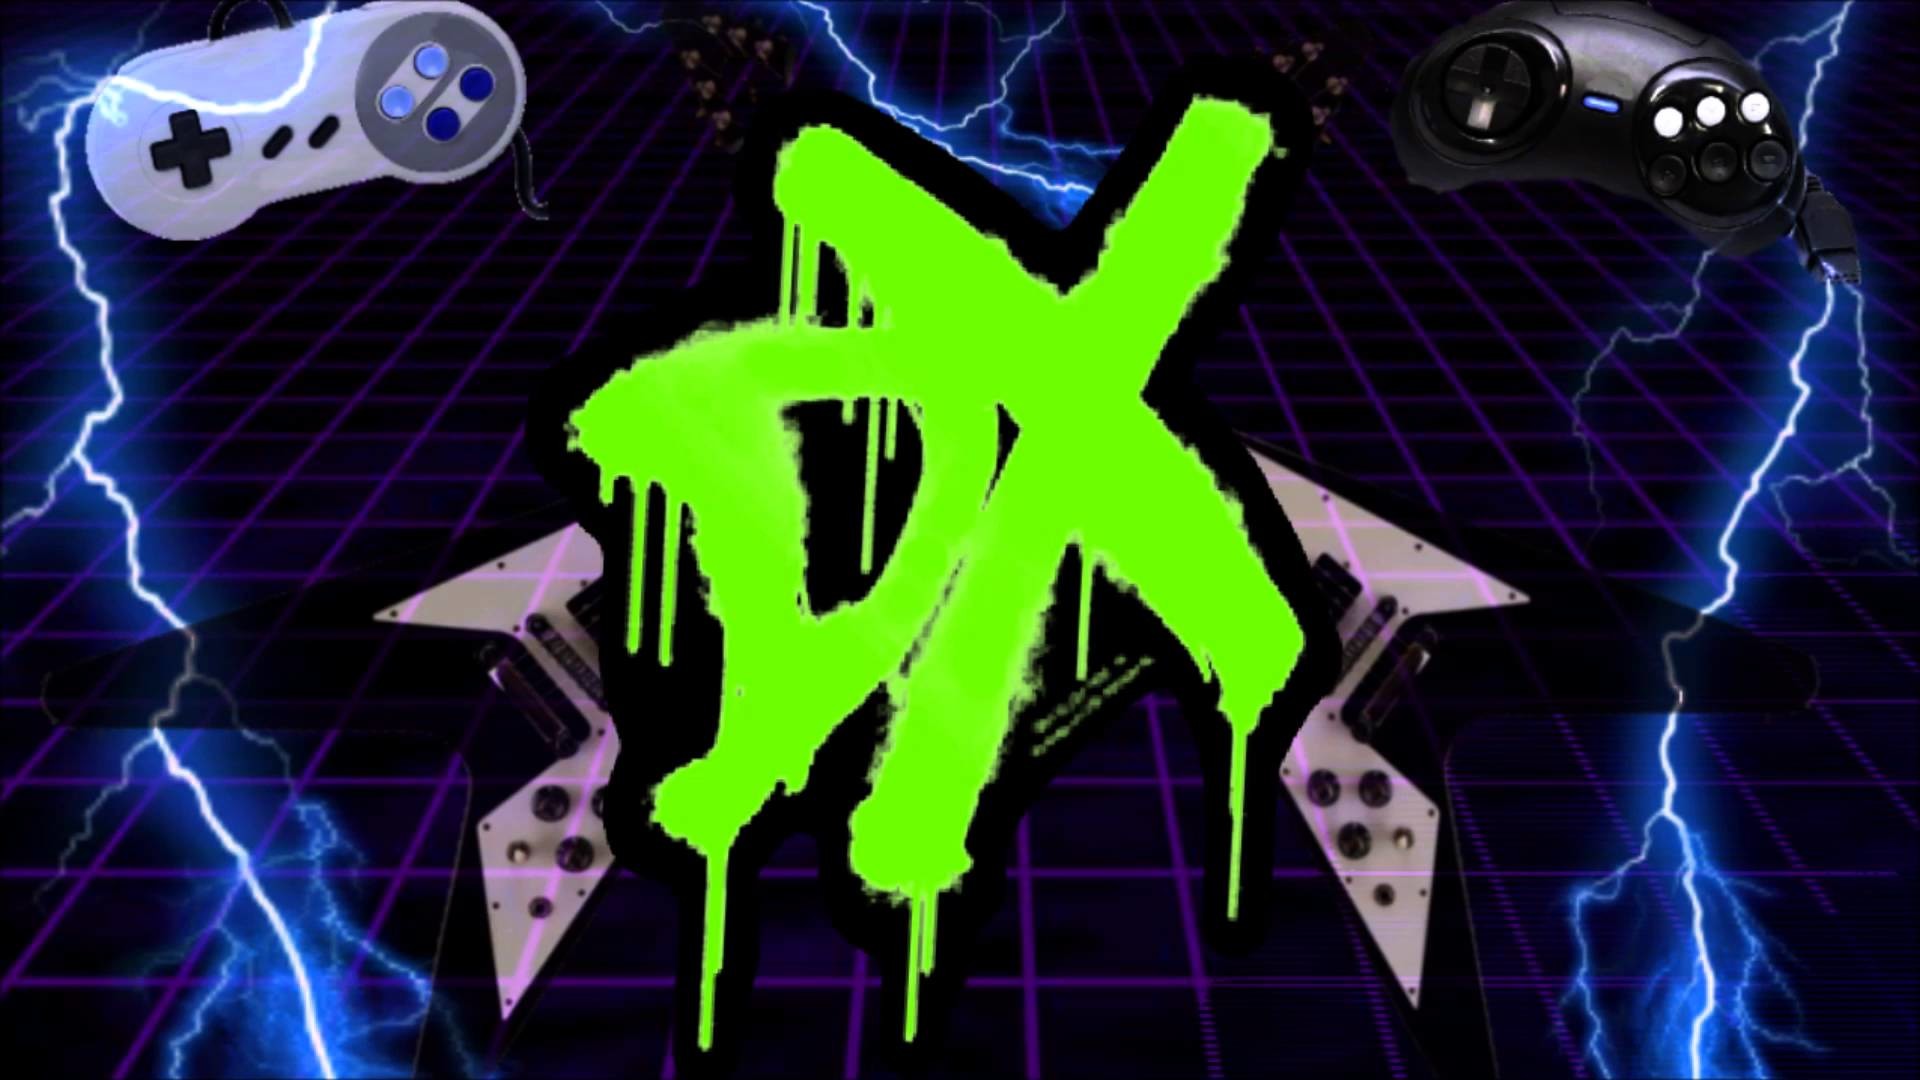 1920x1080 Degeneration X Theme Metal Cover - WWE WWF DX HHH CHYNA HBK - Retro Shred